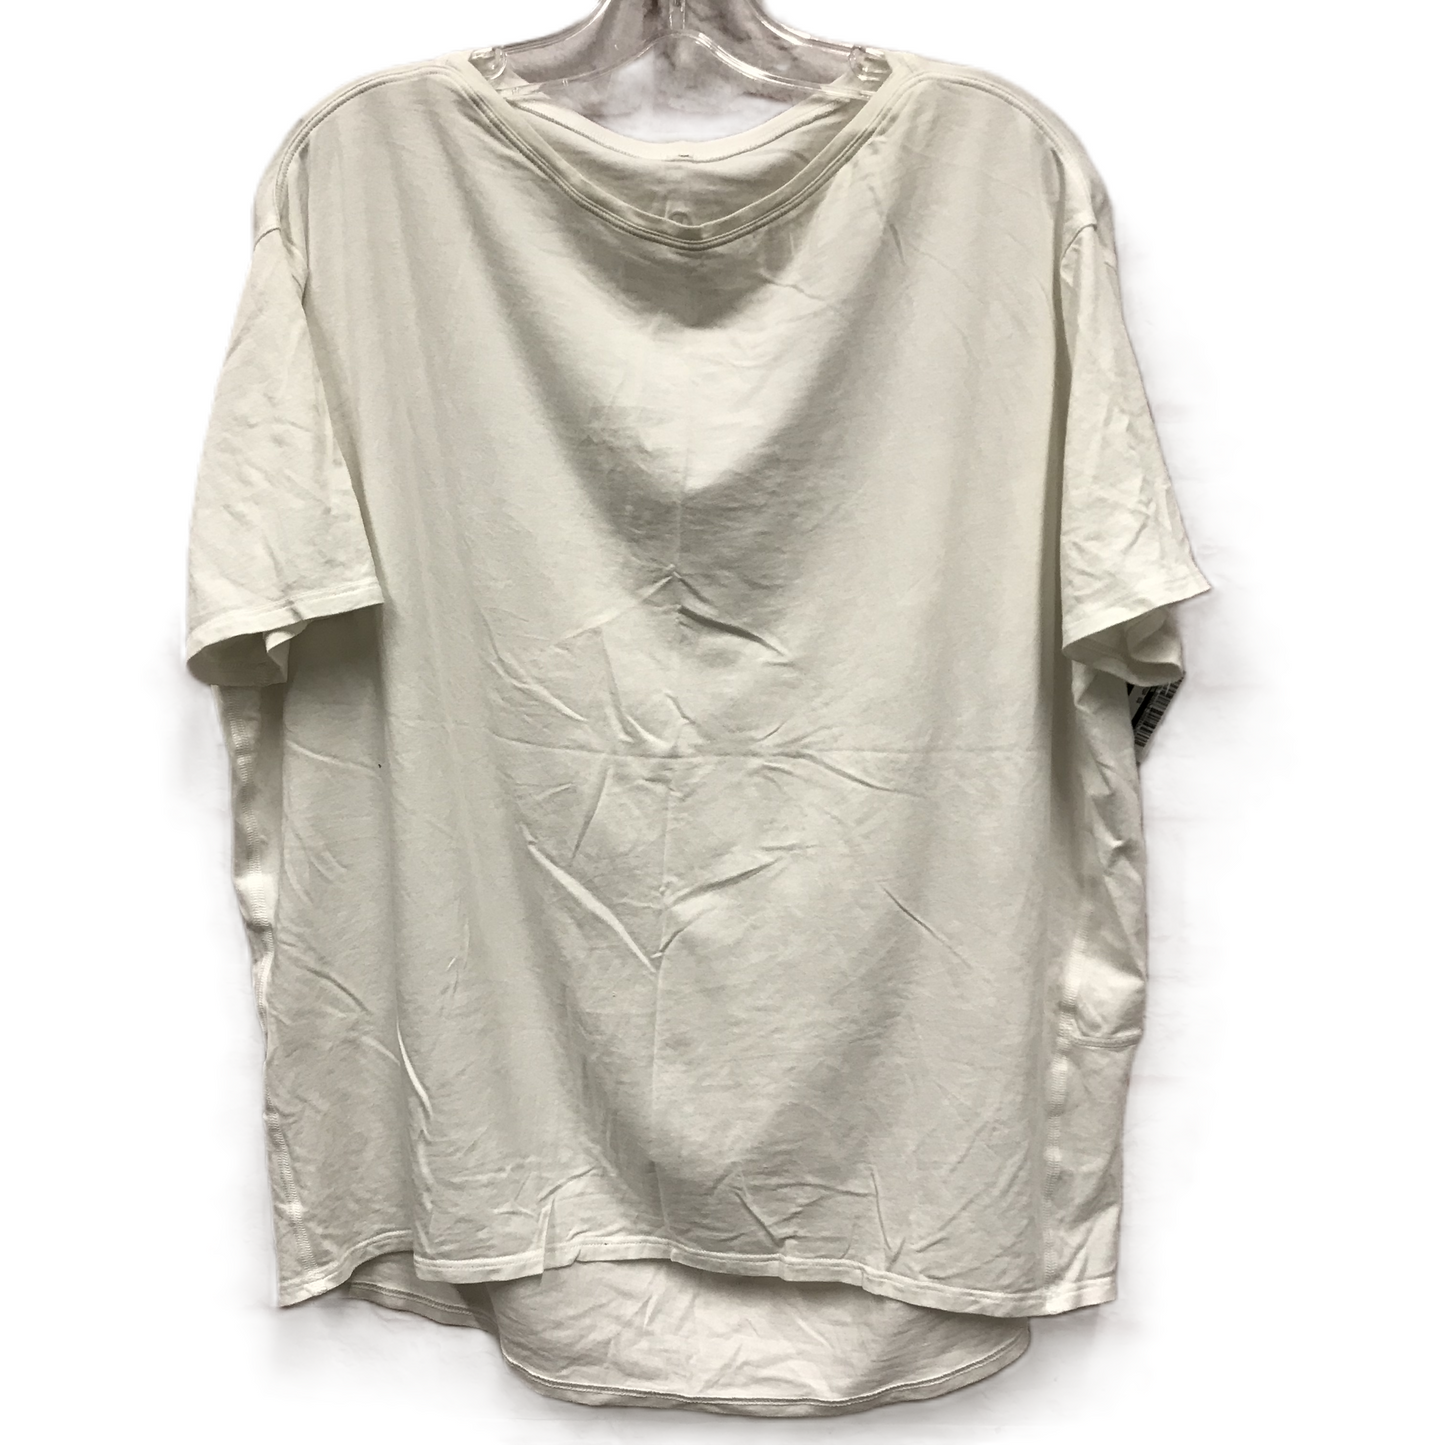 White Athletic Top Short Sleeve By Lululemon, Size: S